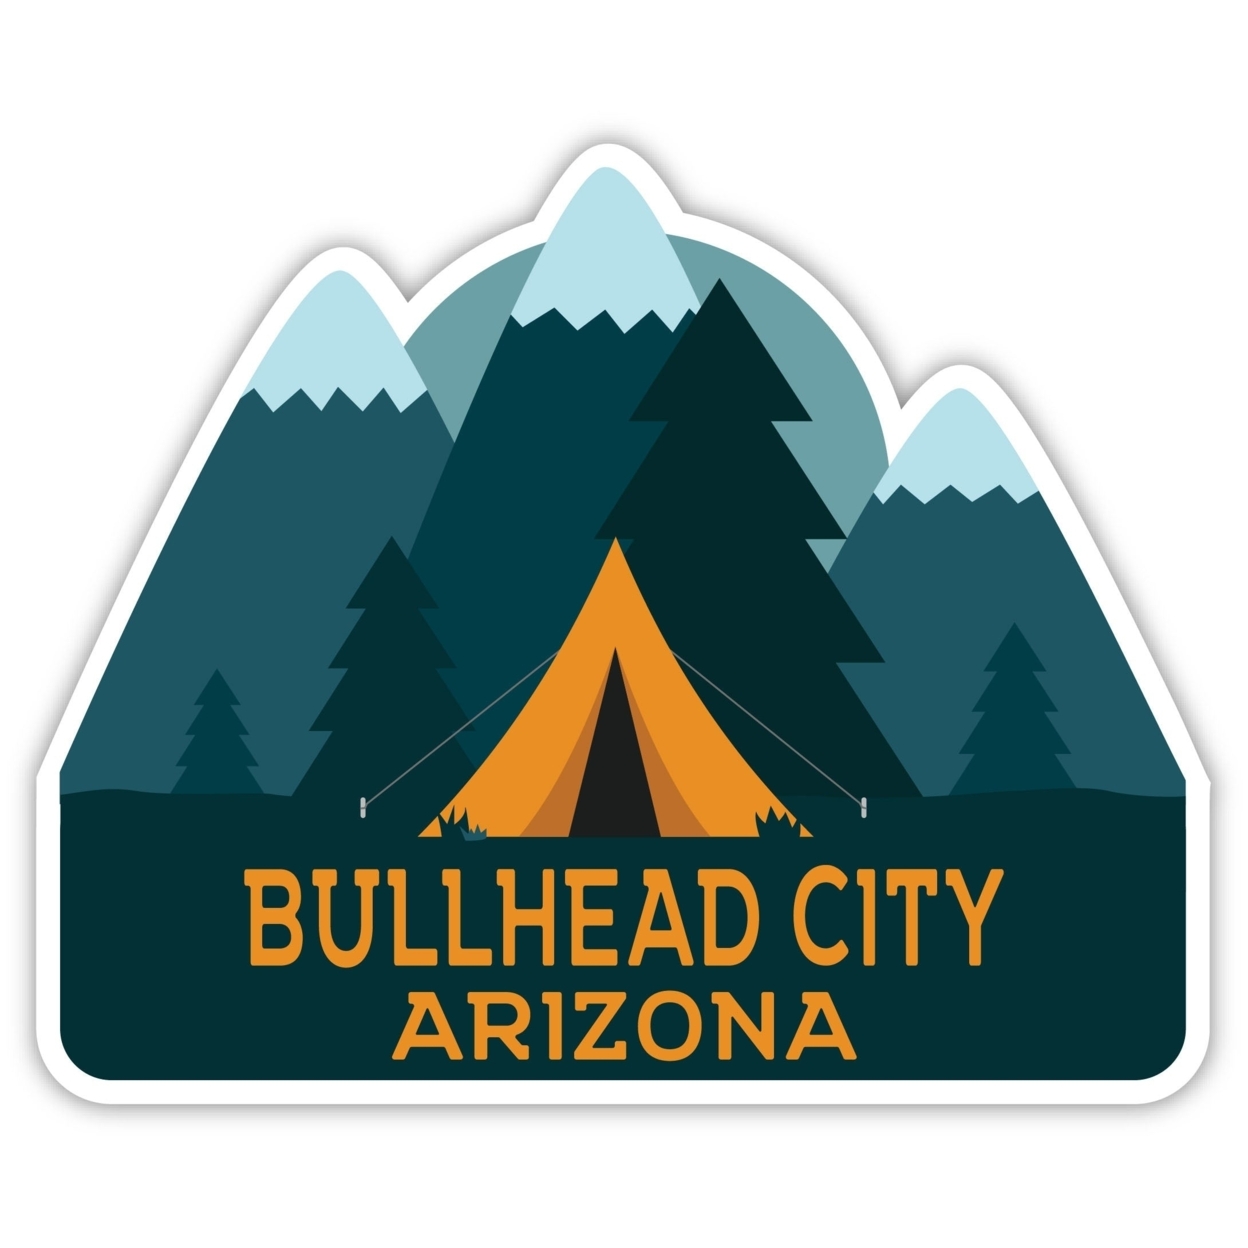 Bullhead City Arizona Souvenir Decorative Stickers (Choose Theme And Size) - Single Unit, 6-Inch, Camp Life